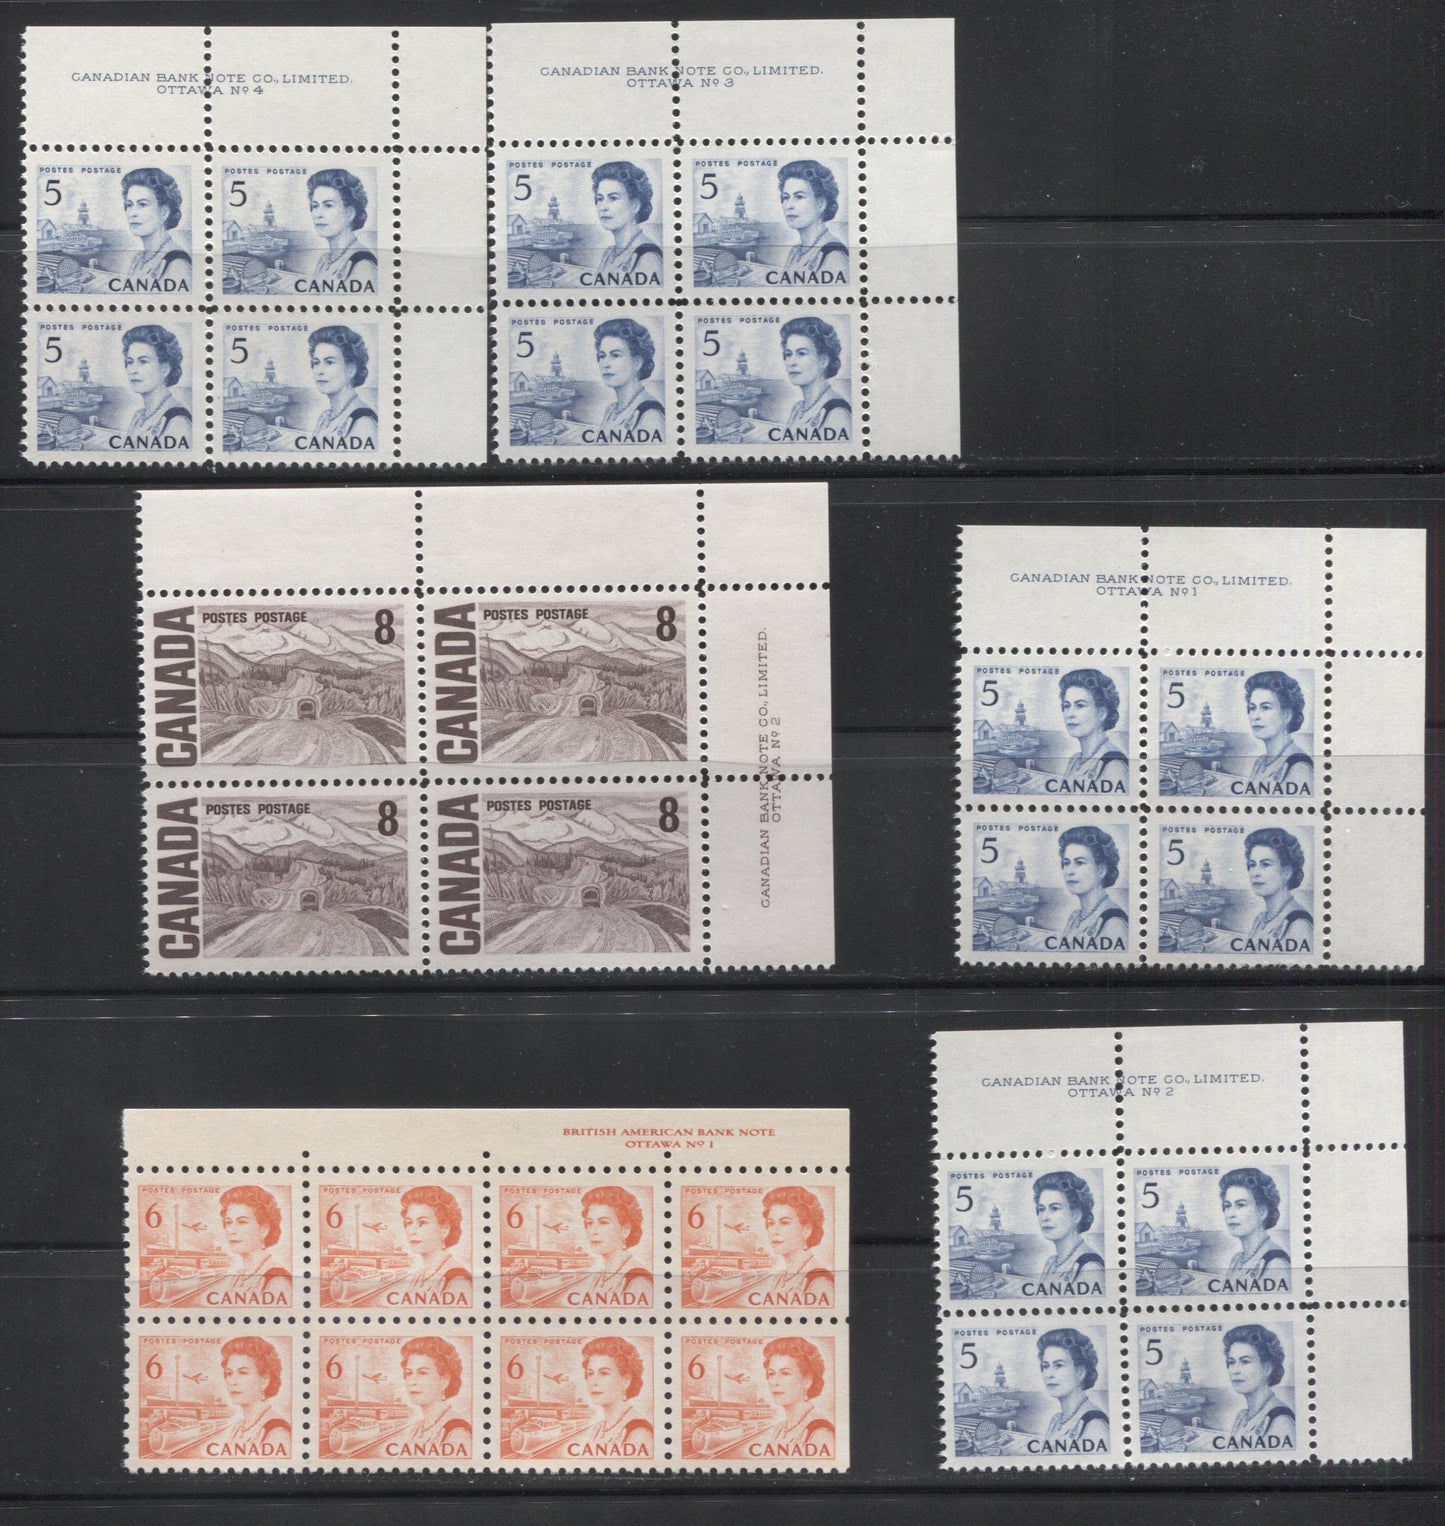 Lot 52 Canada #458-459, 461 5c - 6c, 8c Blue, Orange & Violet Brown Queen Elizabeth II & Alaska Highway, 1967-1973 Centennial Issue, 6 VFNH UR Plates 1-4 Blocks Of 4 & 8 On Dull & Low Fluorescent Papers